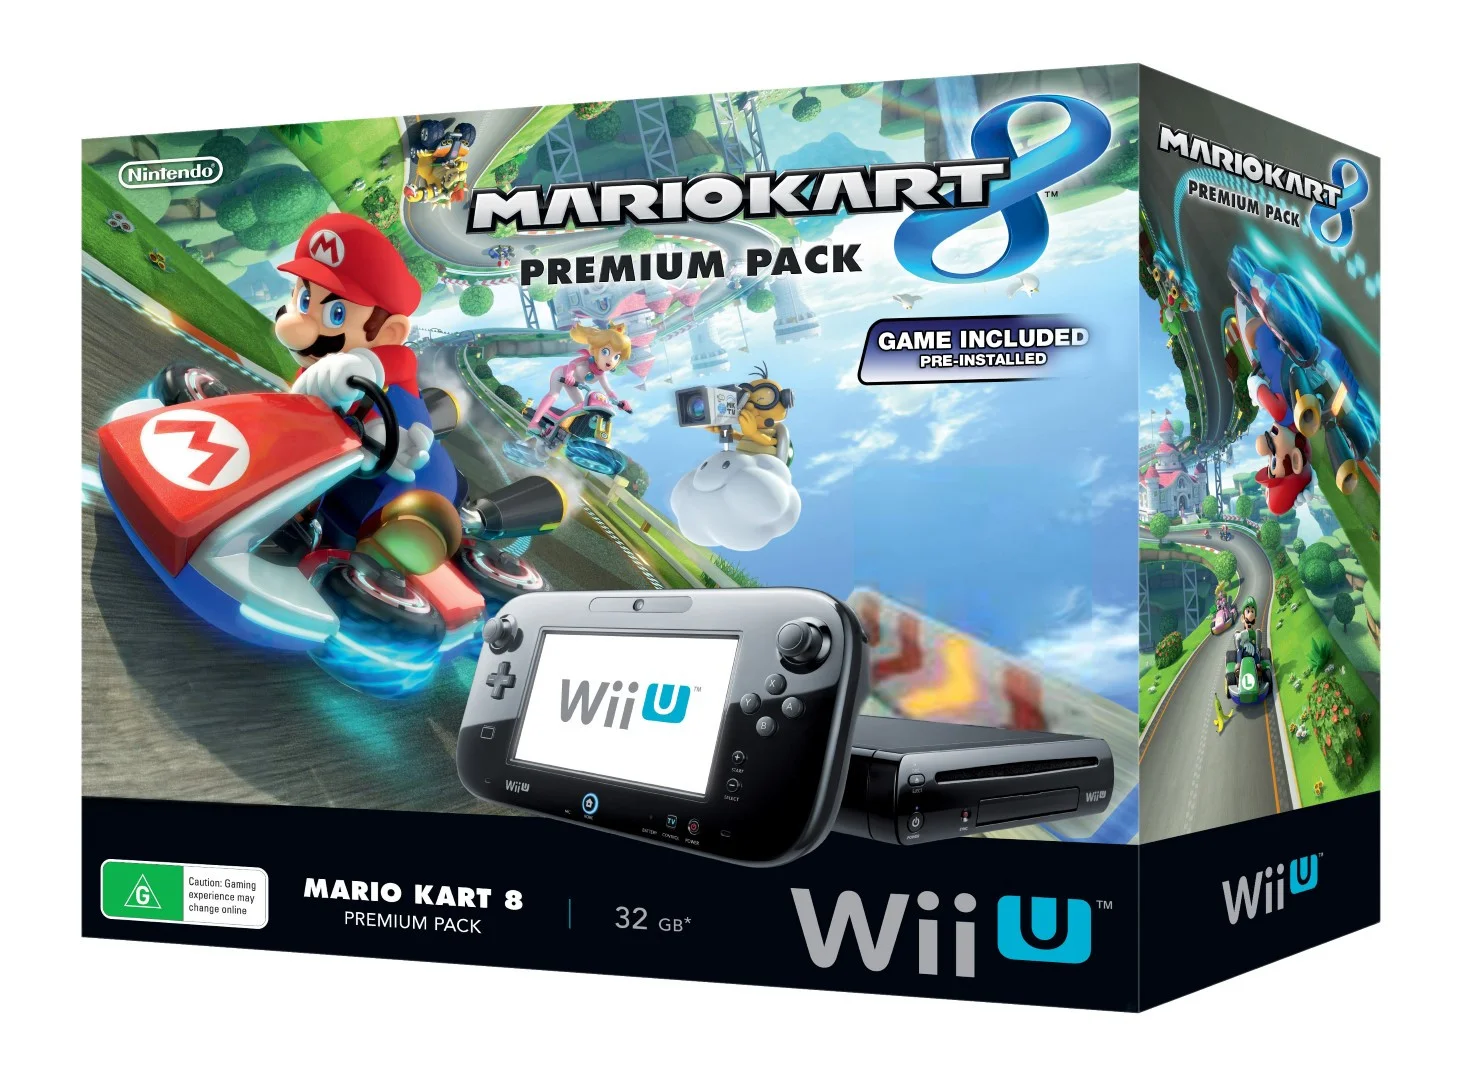 Игровая приставка Nintendo Wii u Premium Pack. Mario Kart 8 Wii u. Консоль игровая приставка Nintendo Wii u Premium Pack. Wii u Mario Kart 8 Premium Pack. Nintendo wii u игры